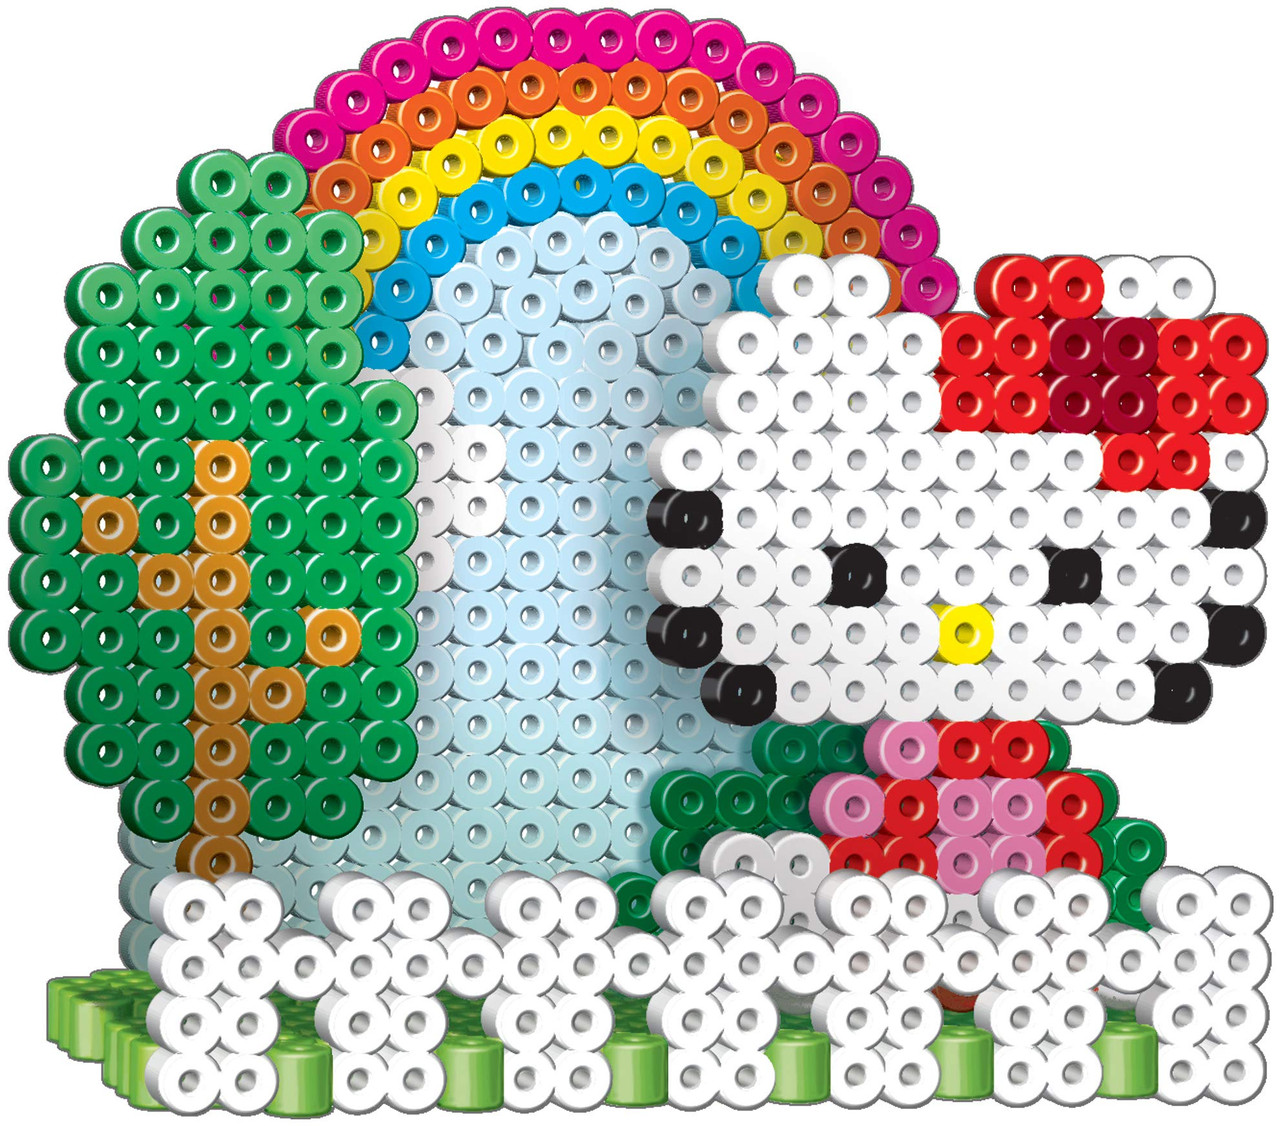 Perler Beads 3D Hello Kitty Bow Fused Bead Kit, 2003pc. - Toys 4 U